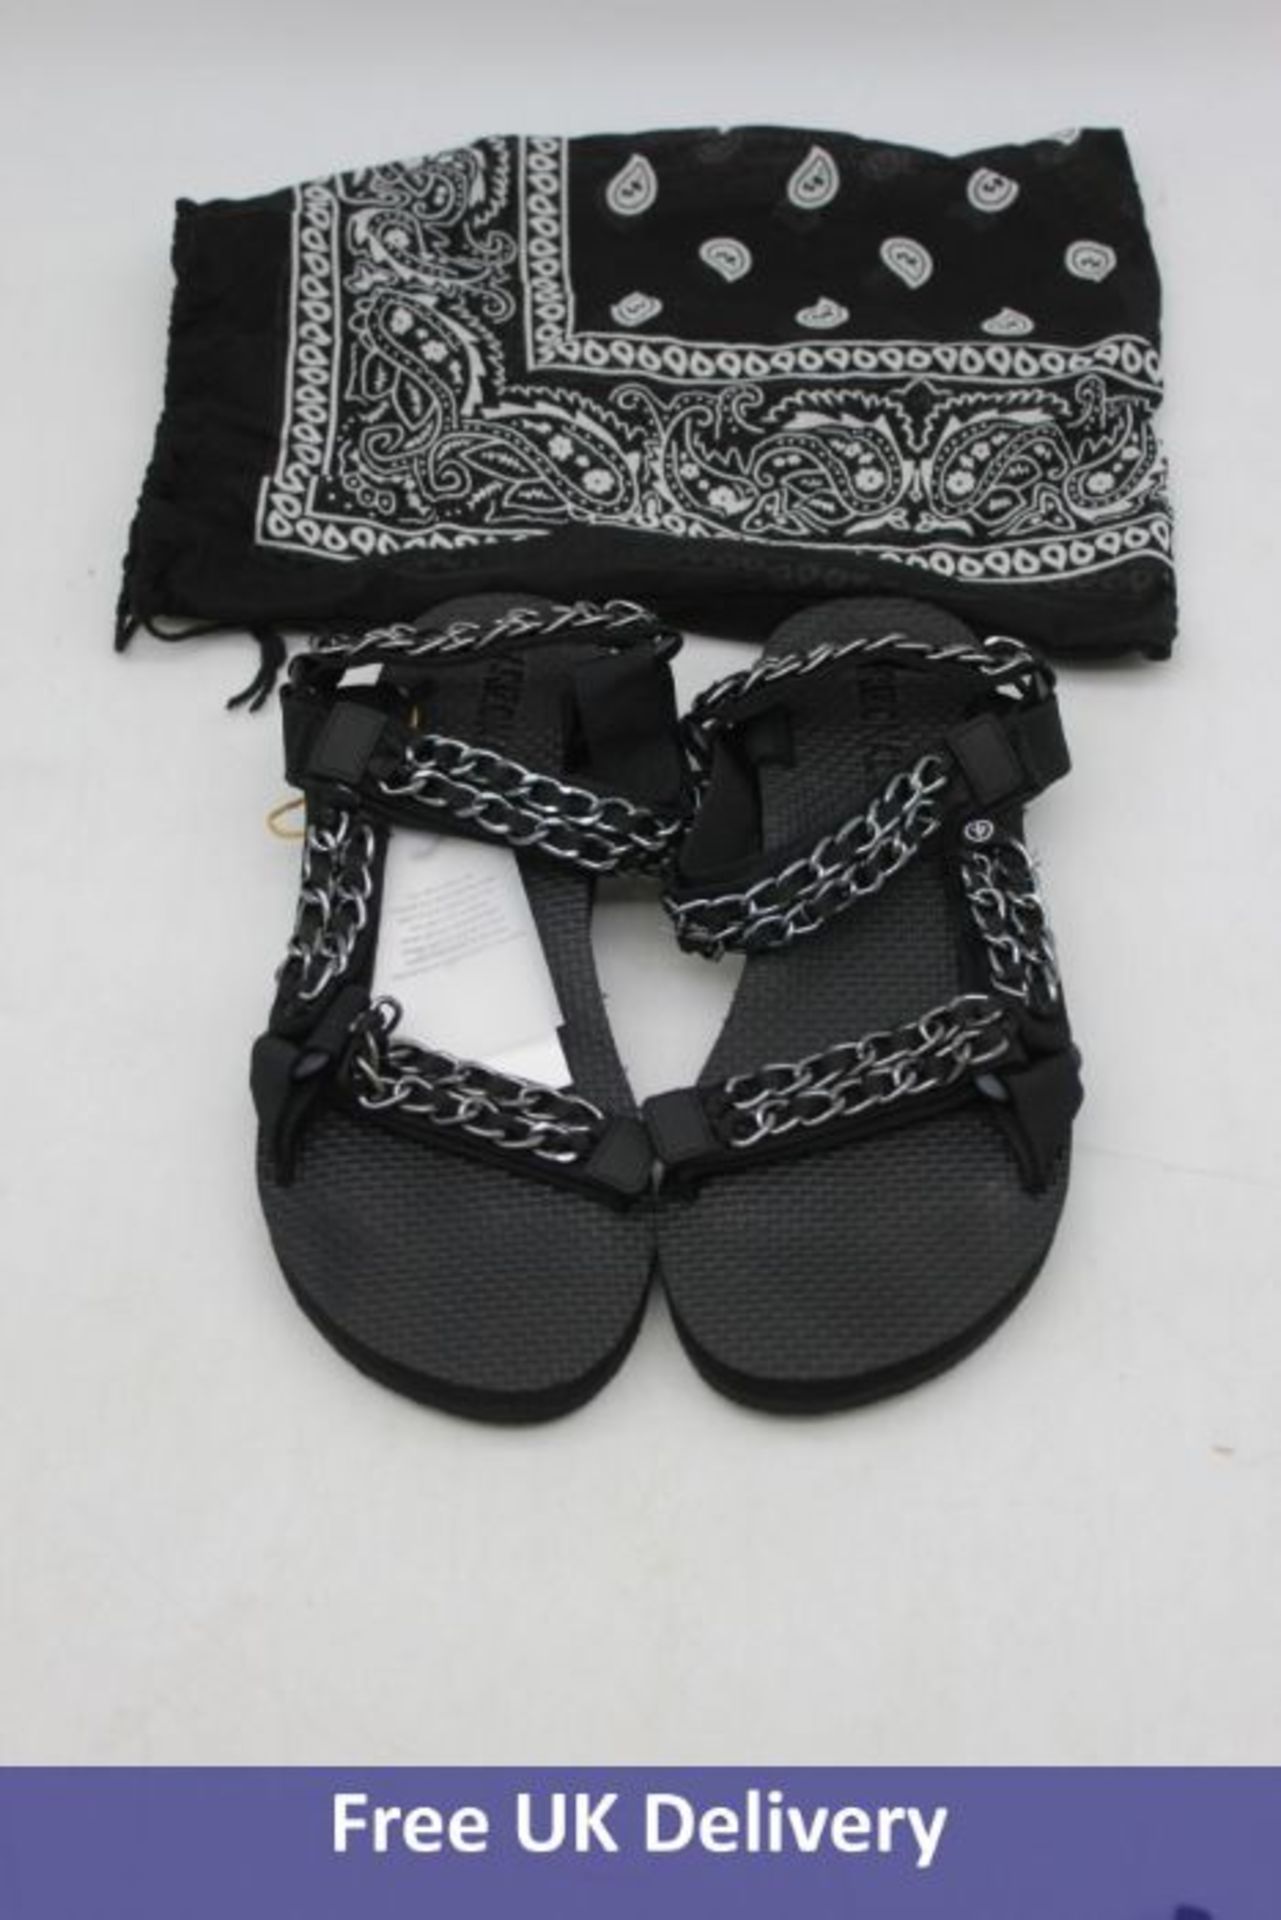 Four Arizona Love, Women's Duo Chain Sandals, Black, UK 6 - Image 2 of 2